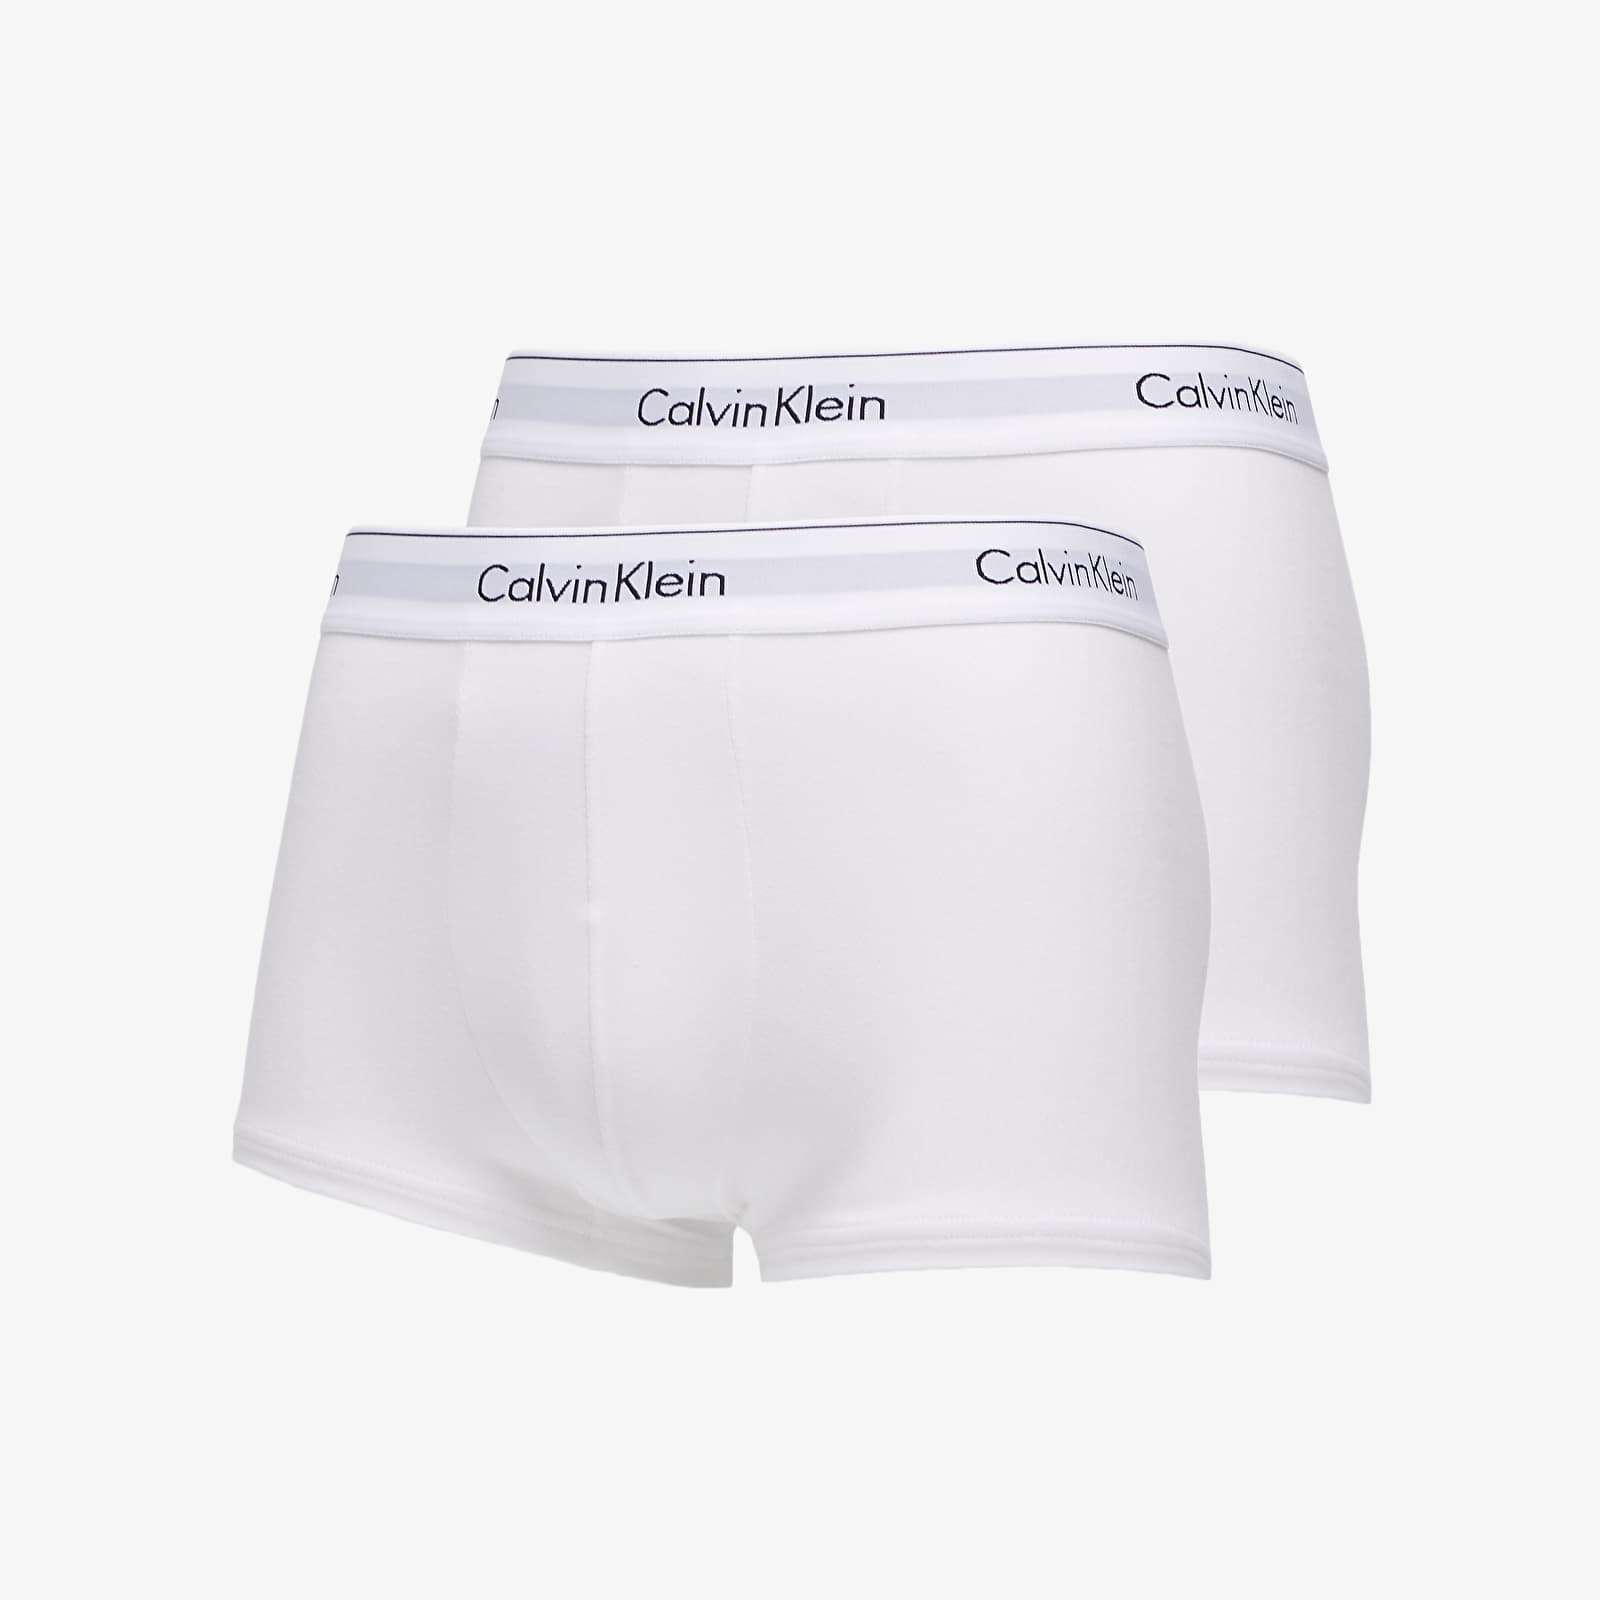 Boxeri Calvin Klein Trunks 2 Pack White